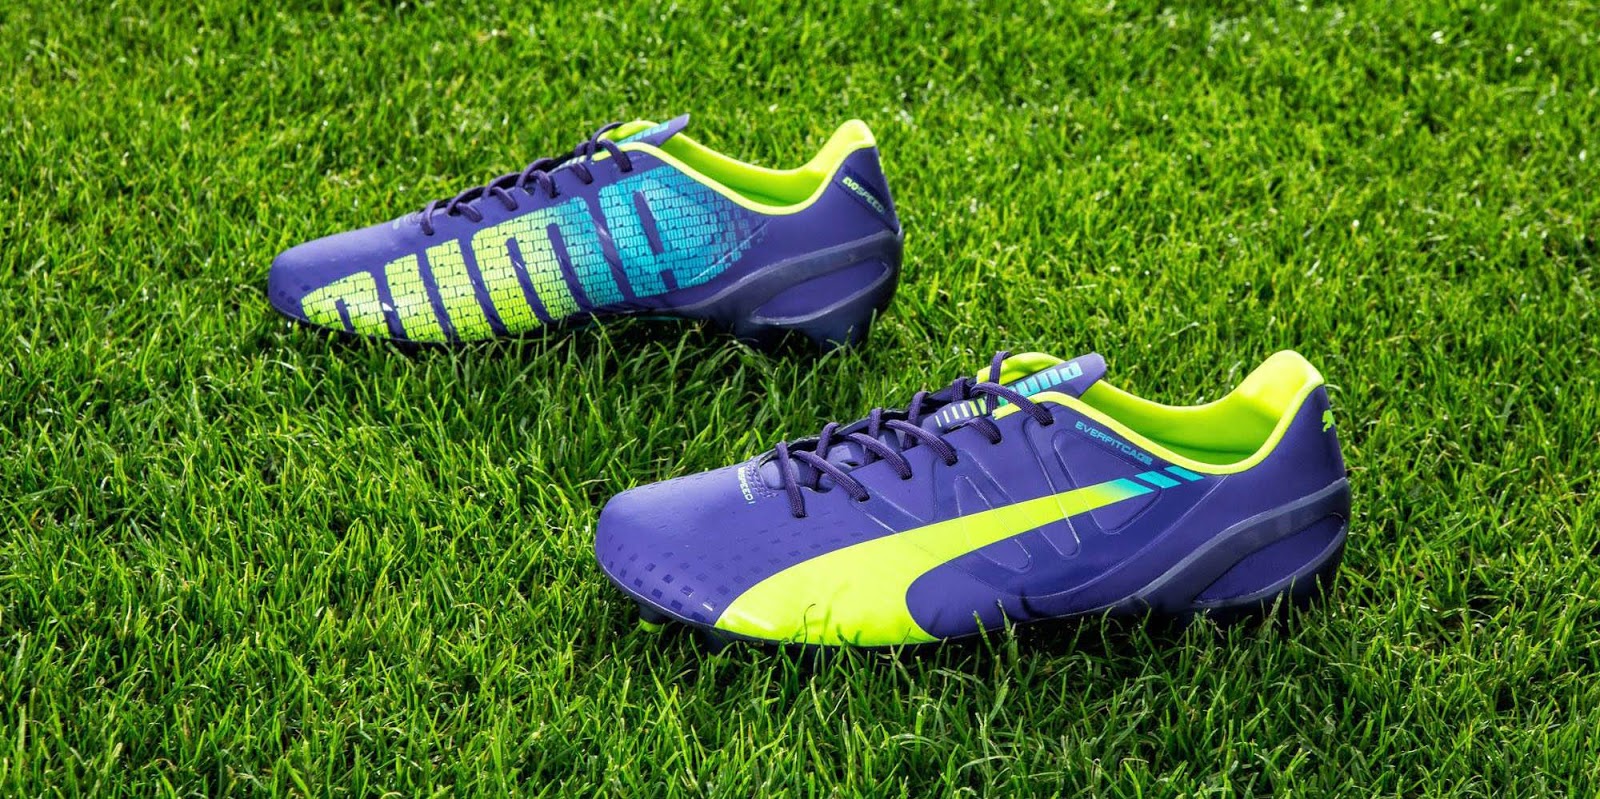 purple puma football boots